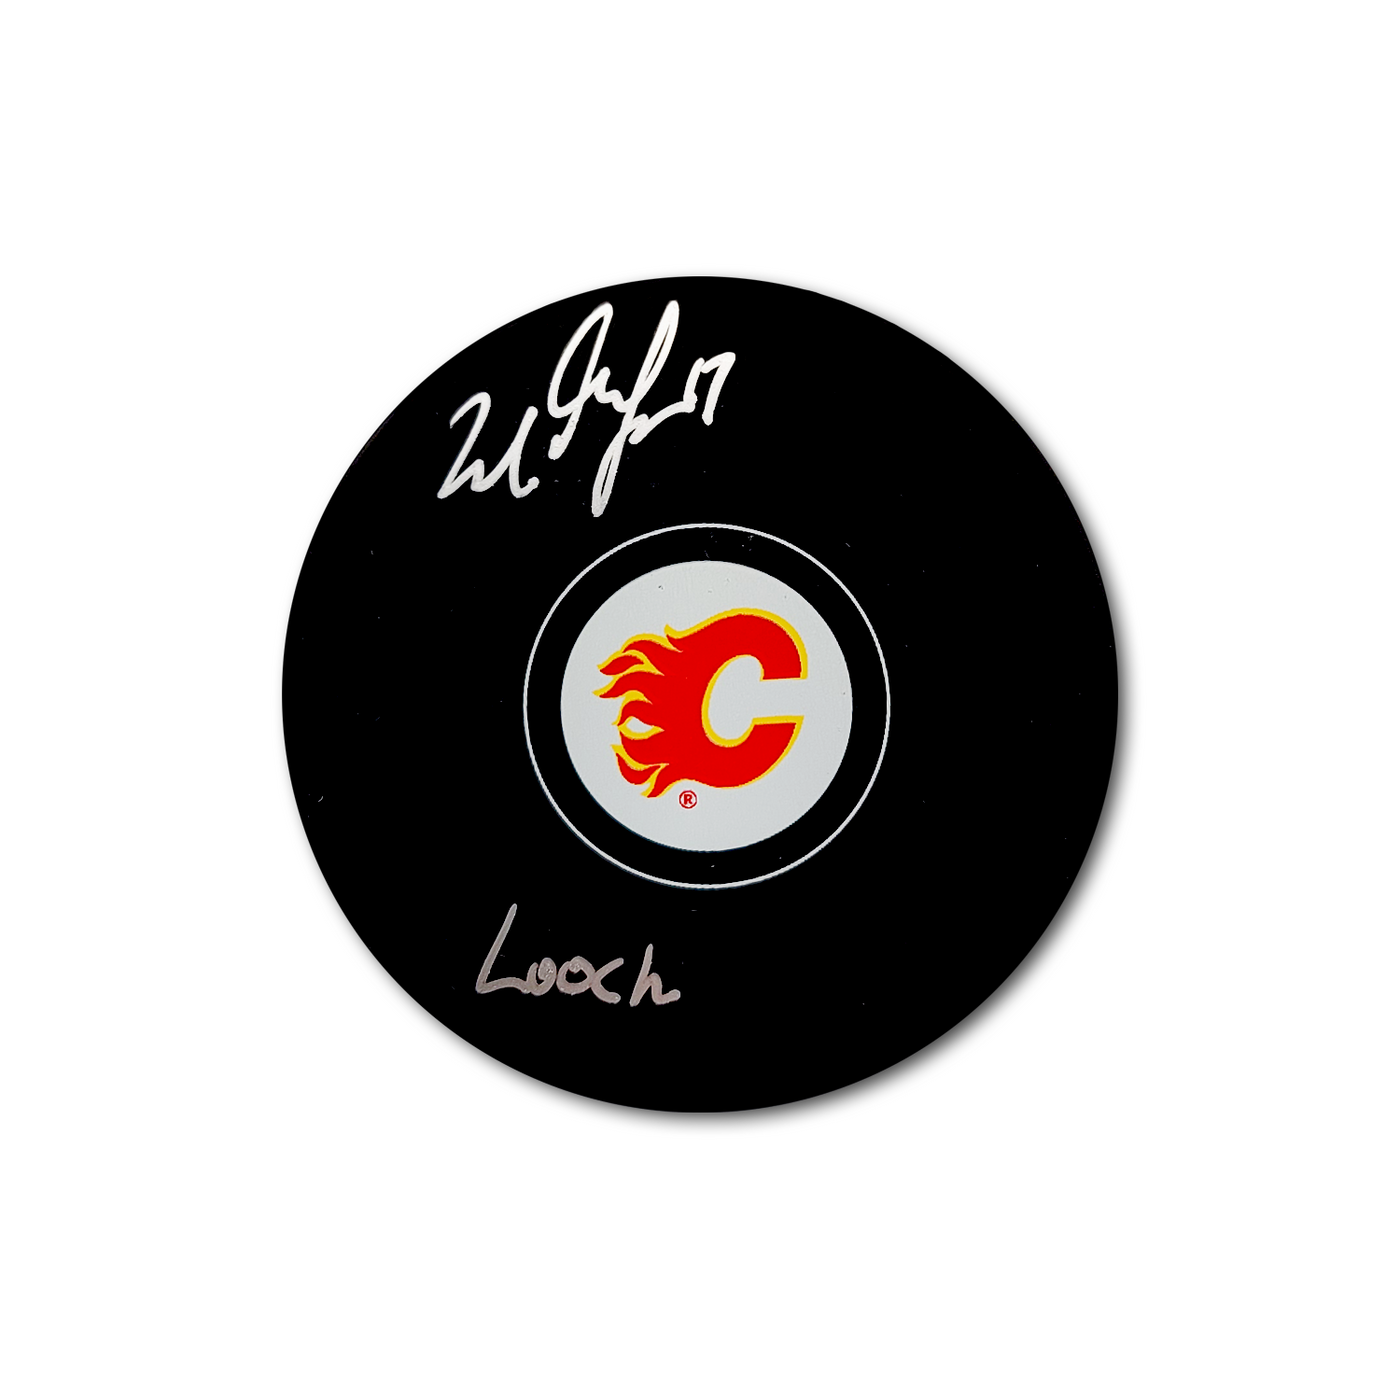 Milan Lucic Calgary Flames Autographed Hockey Puck Inscribed Looch